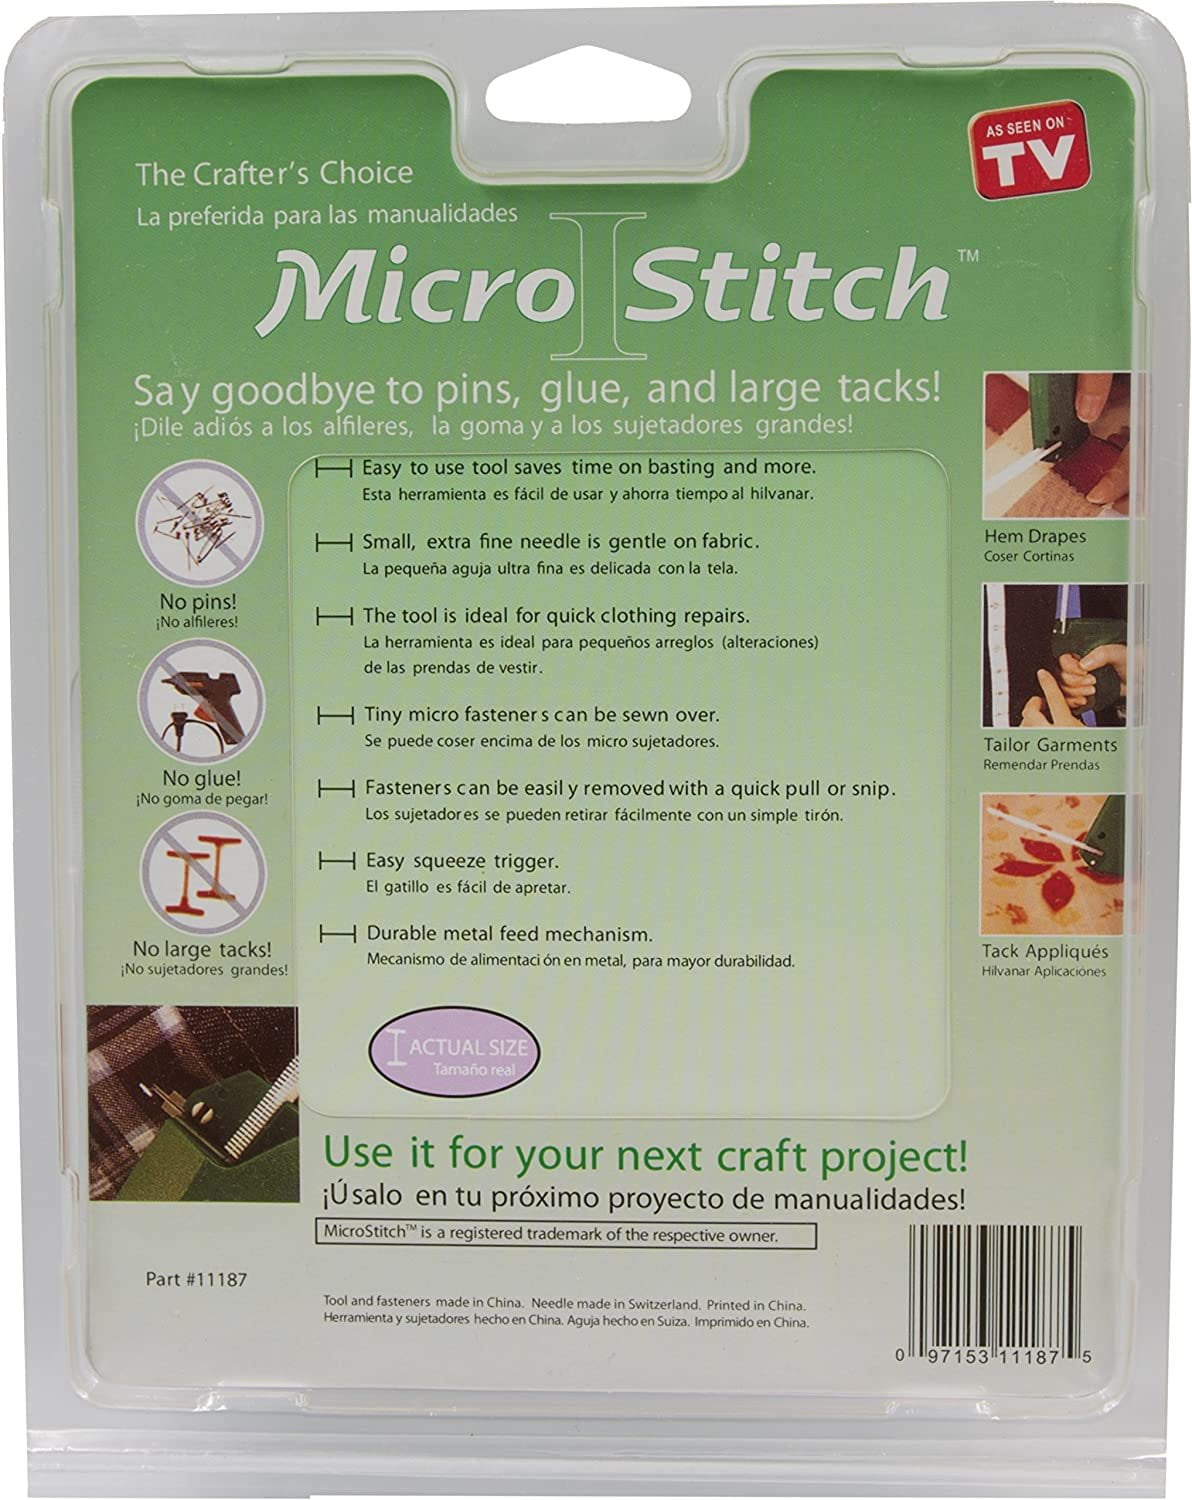 Wedding / Travel Emergency Kit MUST Have: MicroStitch Needle Gun! I go, micro stitch tool